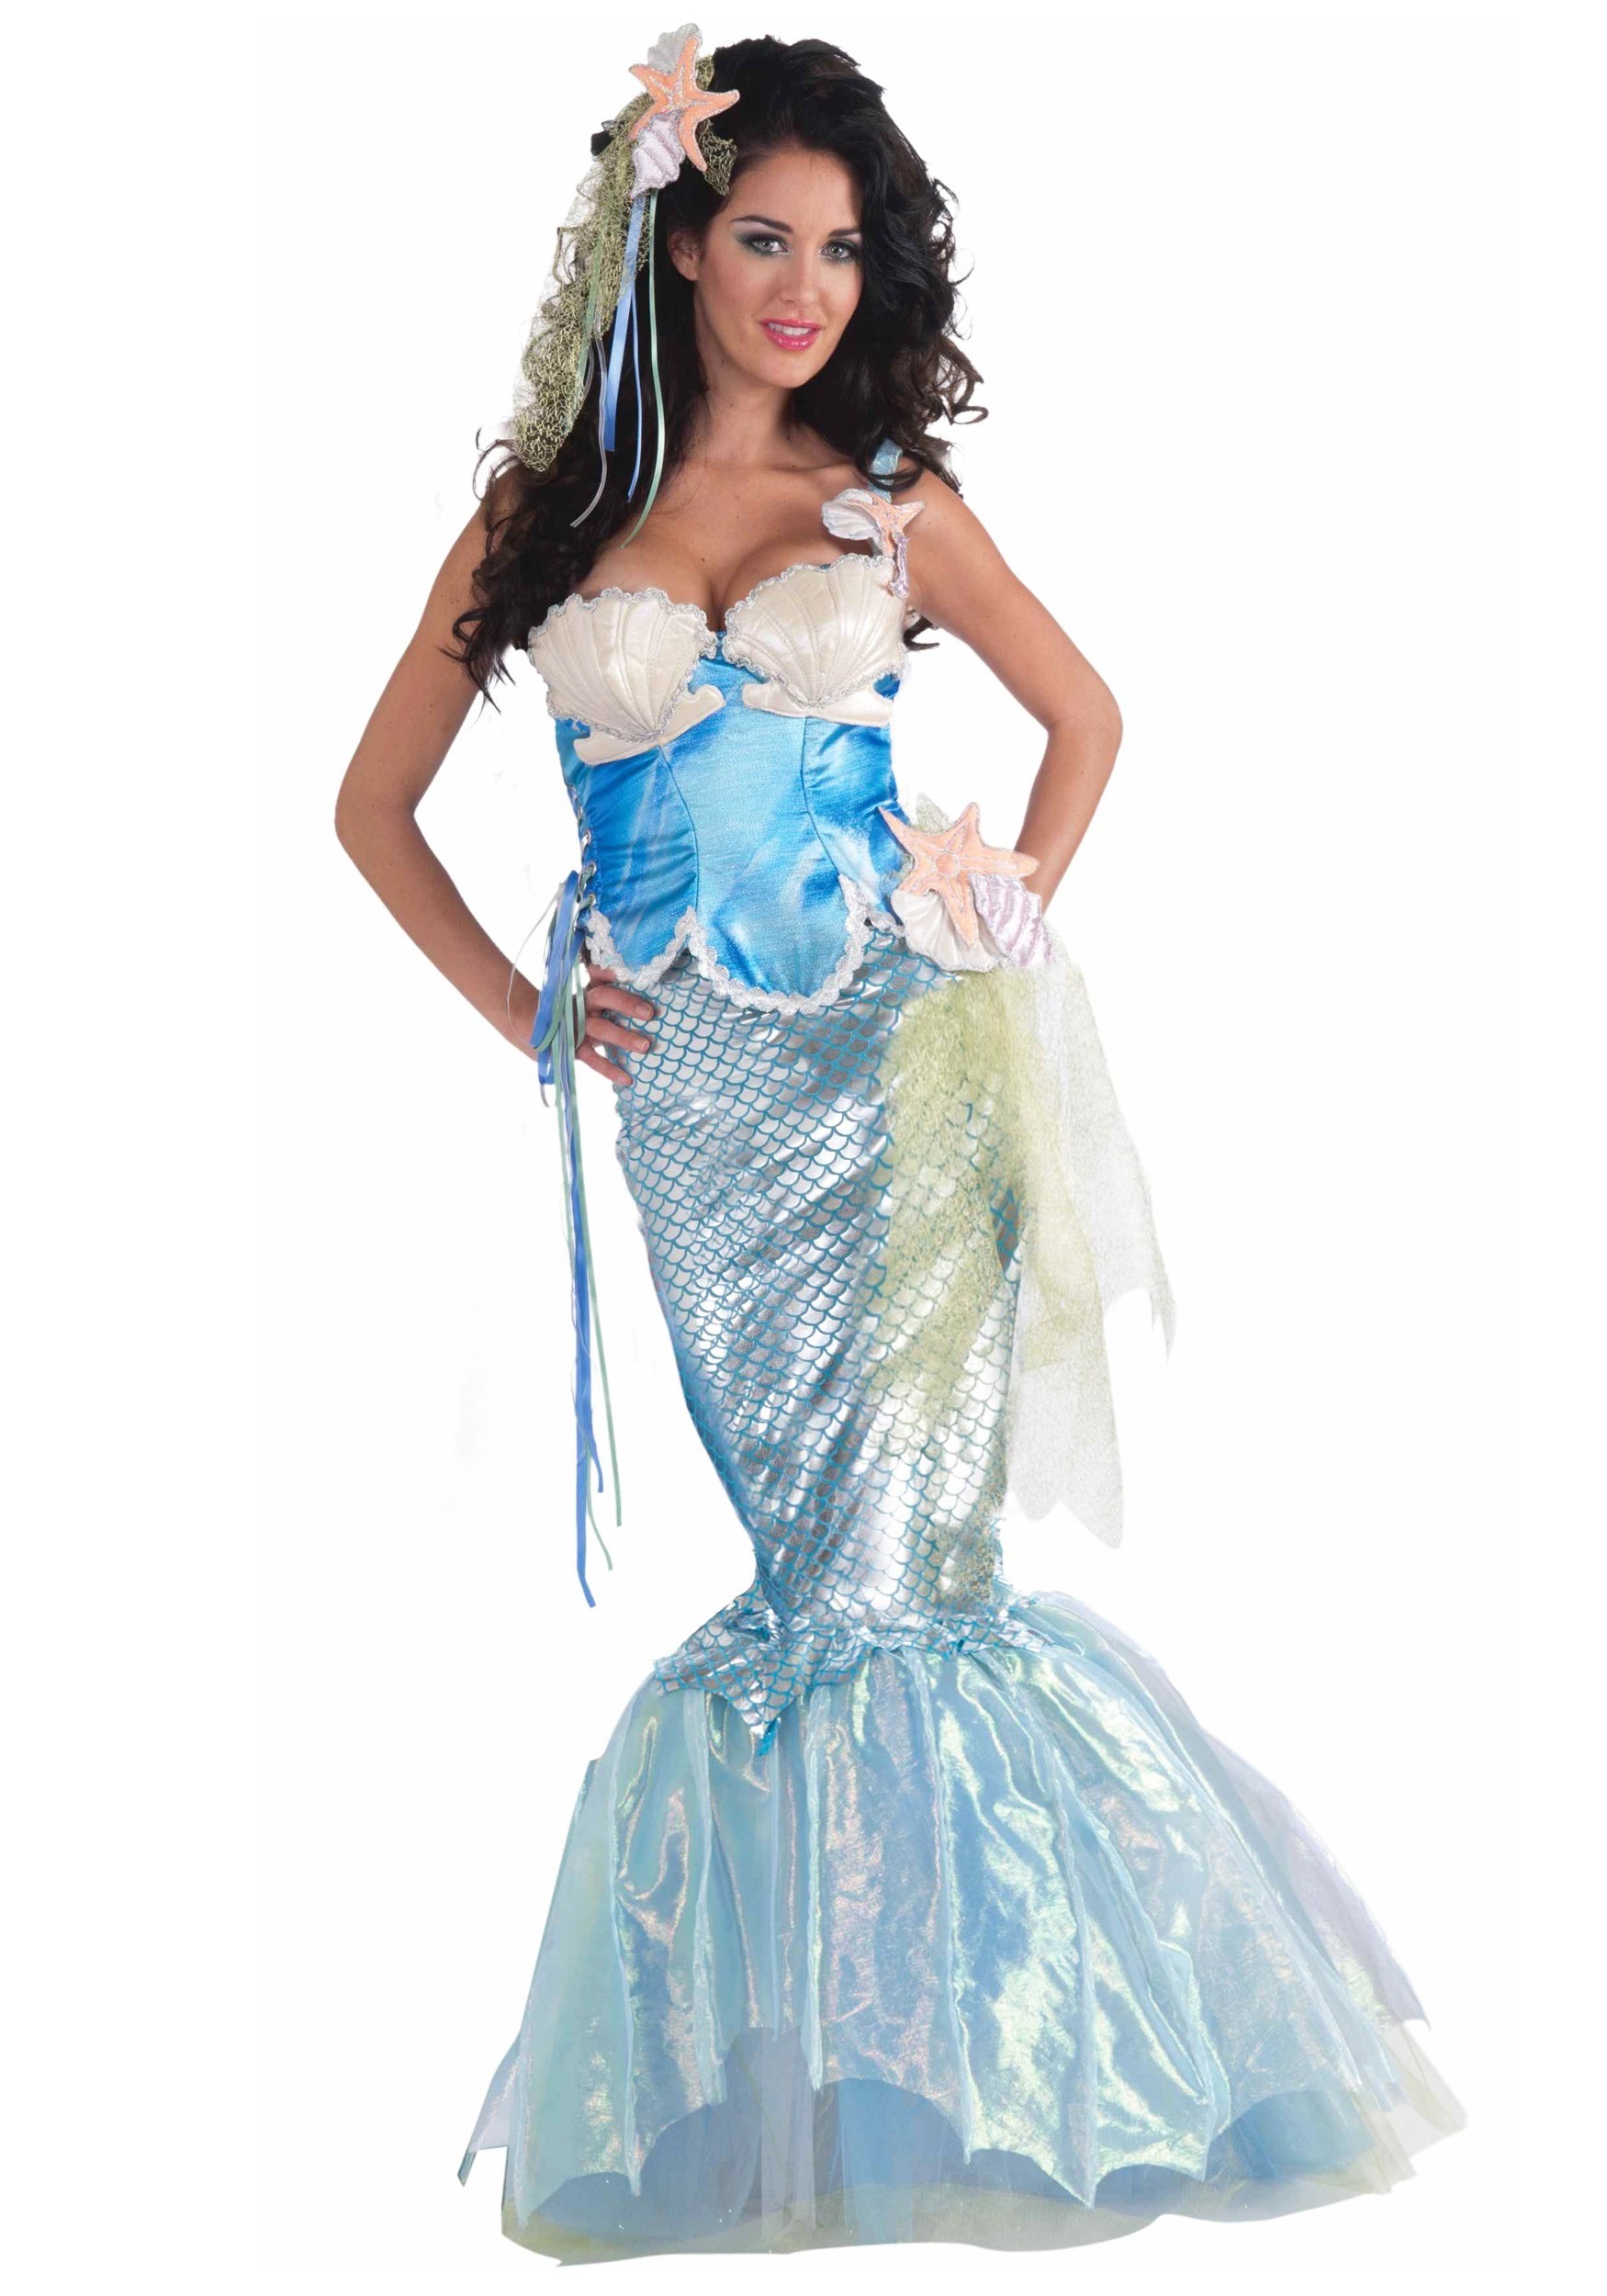 Pearl White and Silver Seashell Mermaid Adult Halloween Costume Mask